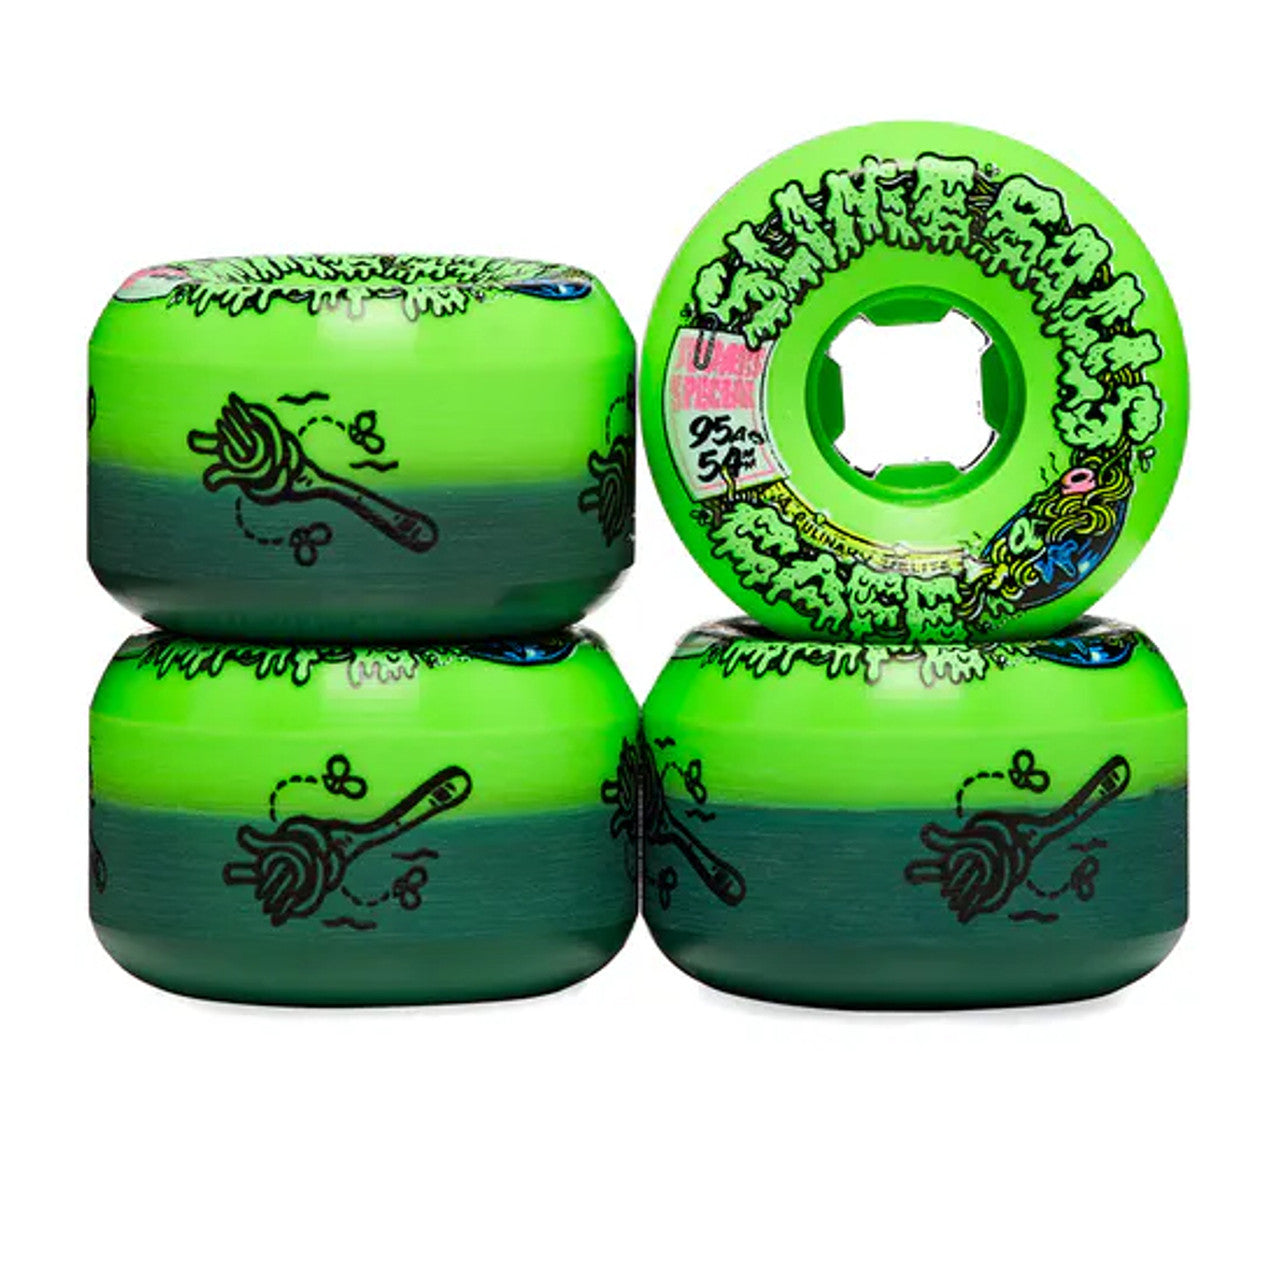 Slime Balls Wheels 54mm Double Take Cafe Vomit Mini Green Black 95a